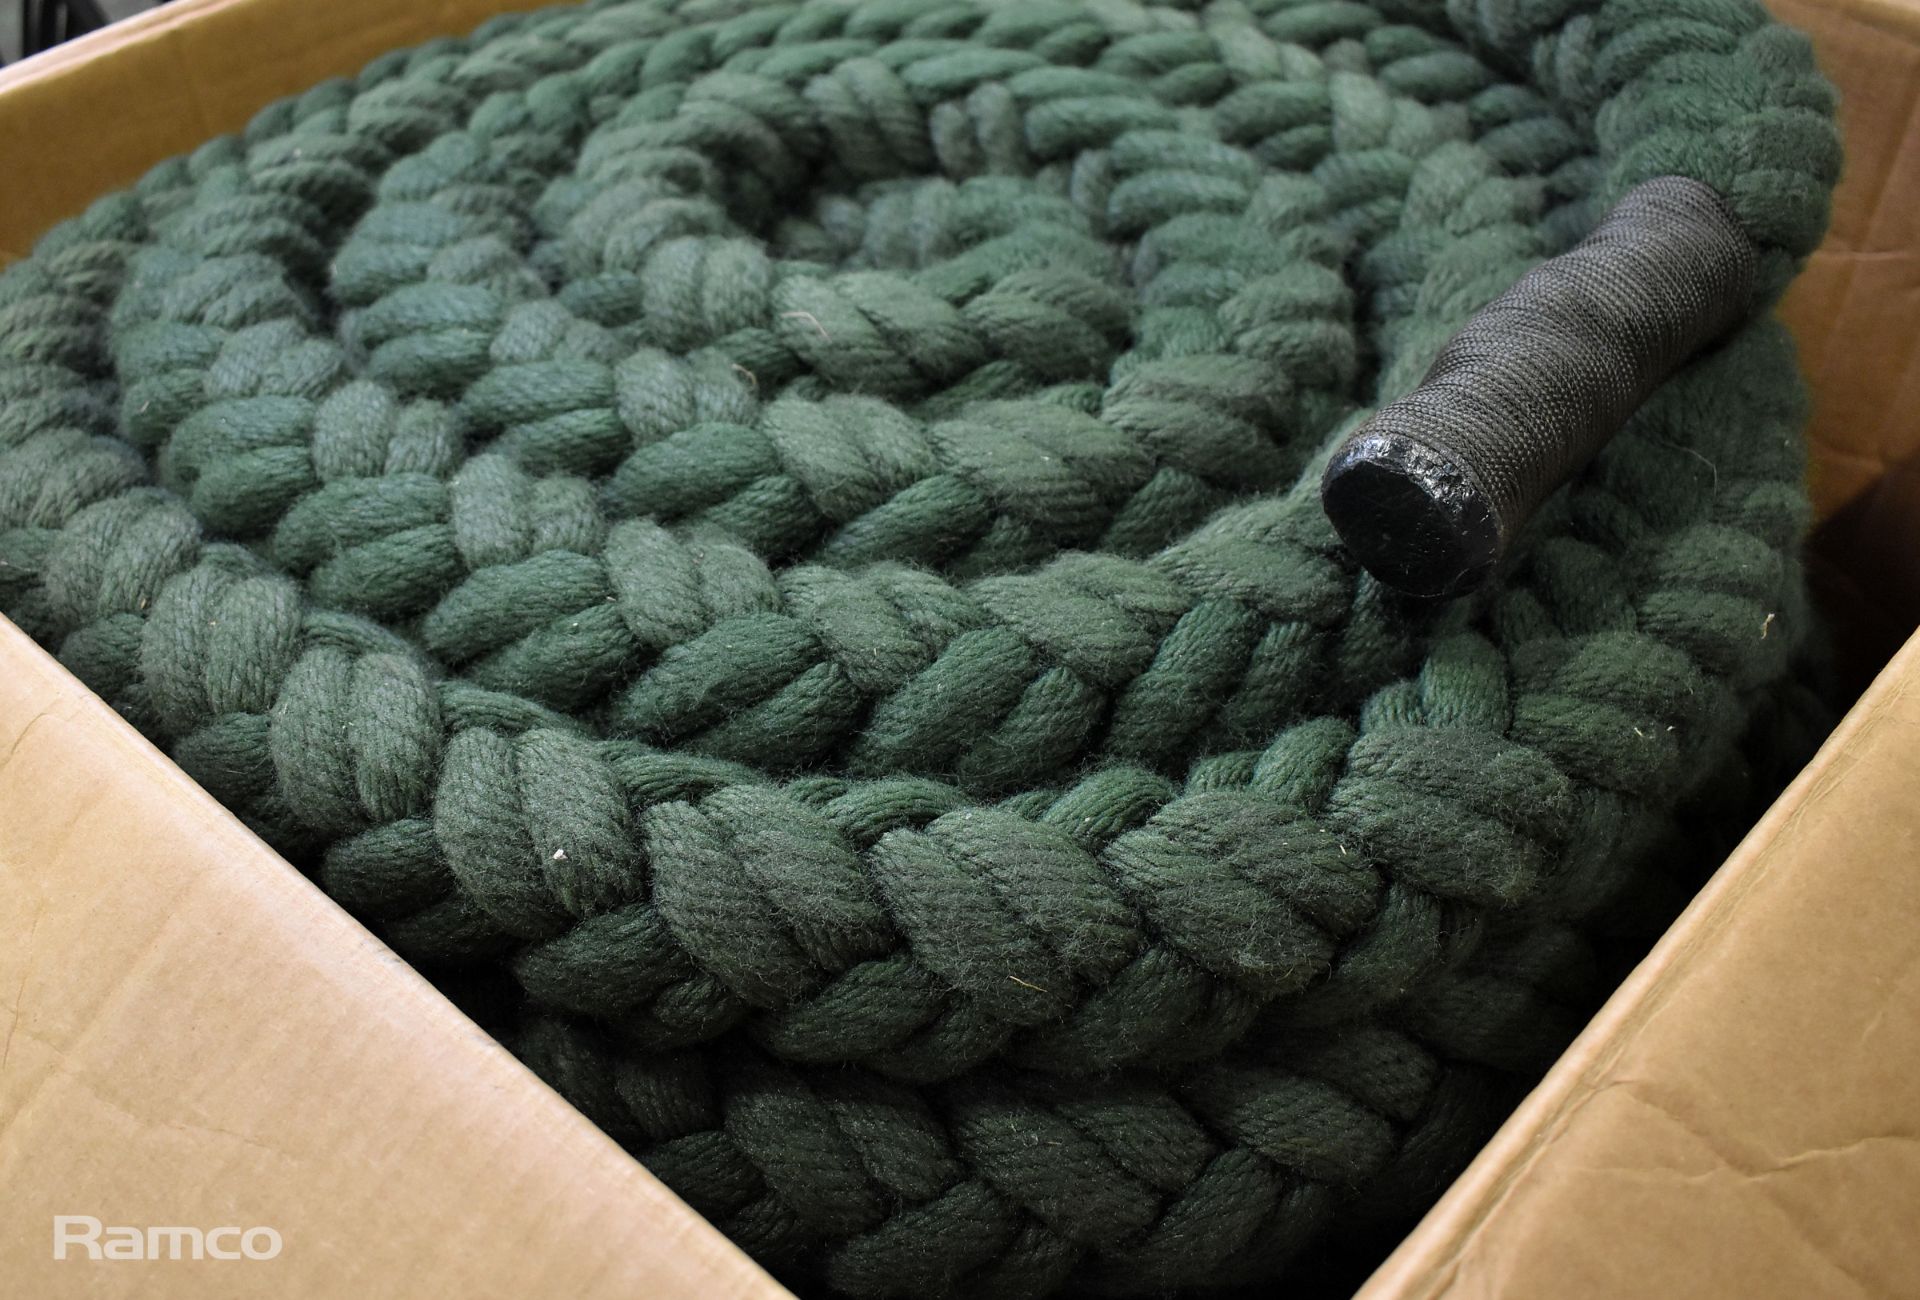 Heavy duty rope - dark green - 90ft - boxed - Image 3 of 3